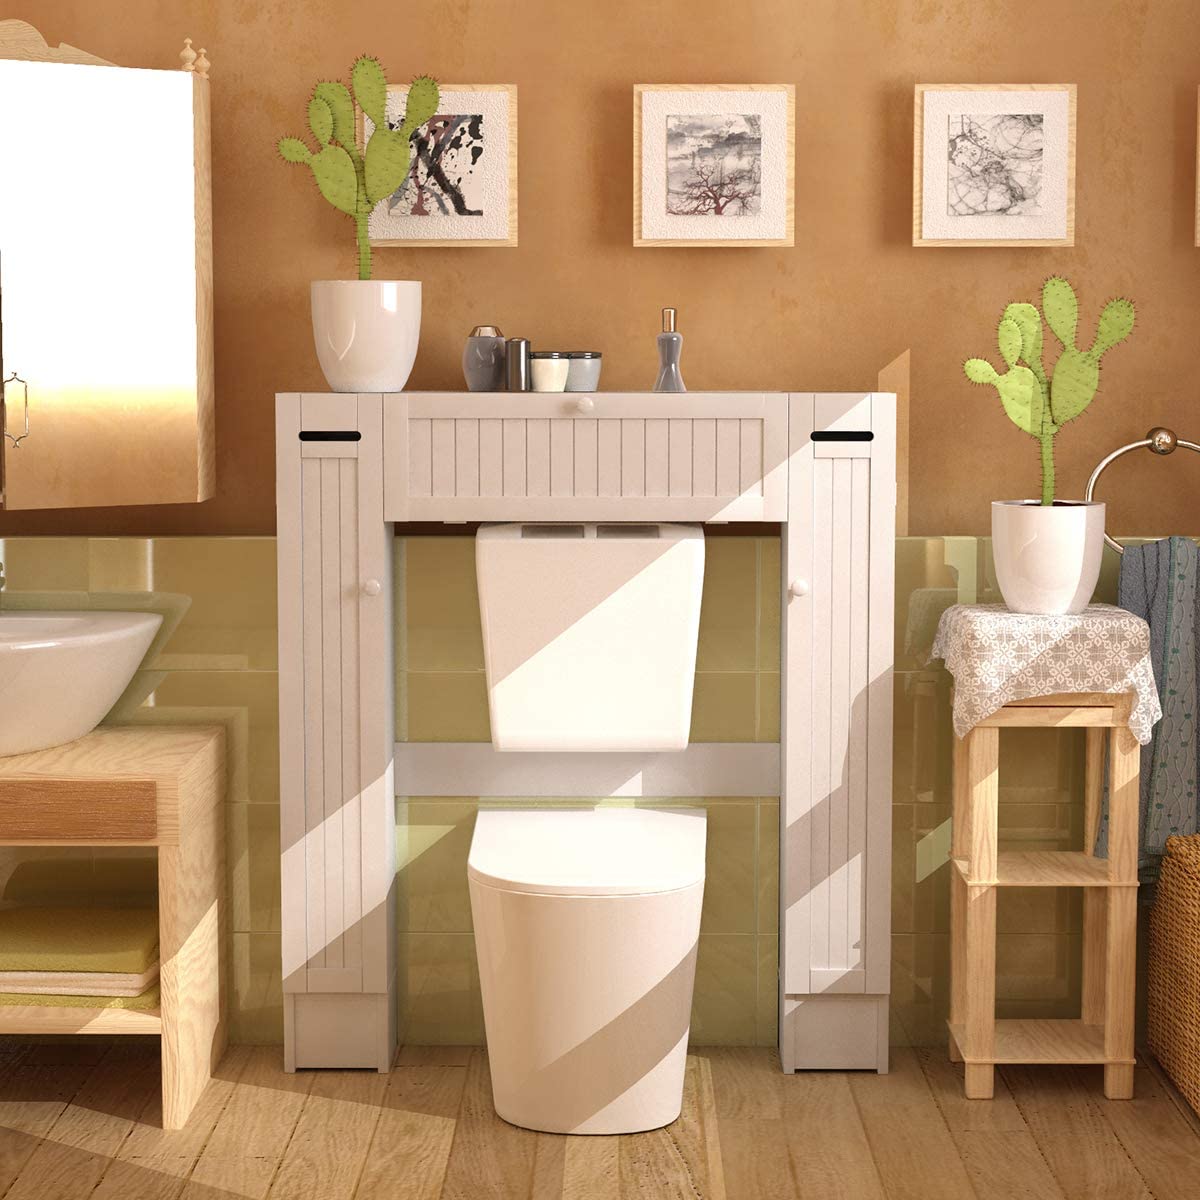 Finnhomy 3 Shelf Bathroom Space Saver Over The Toilet Rack Bathroom Co